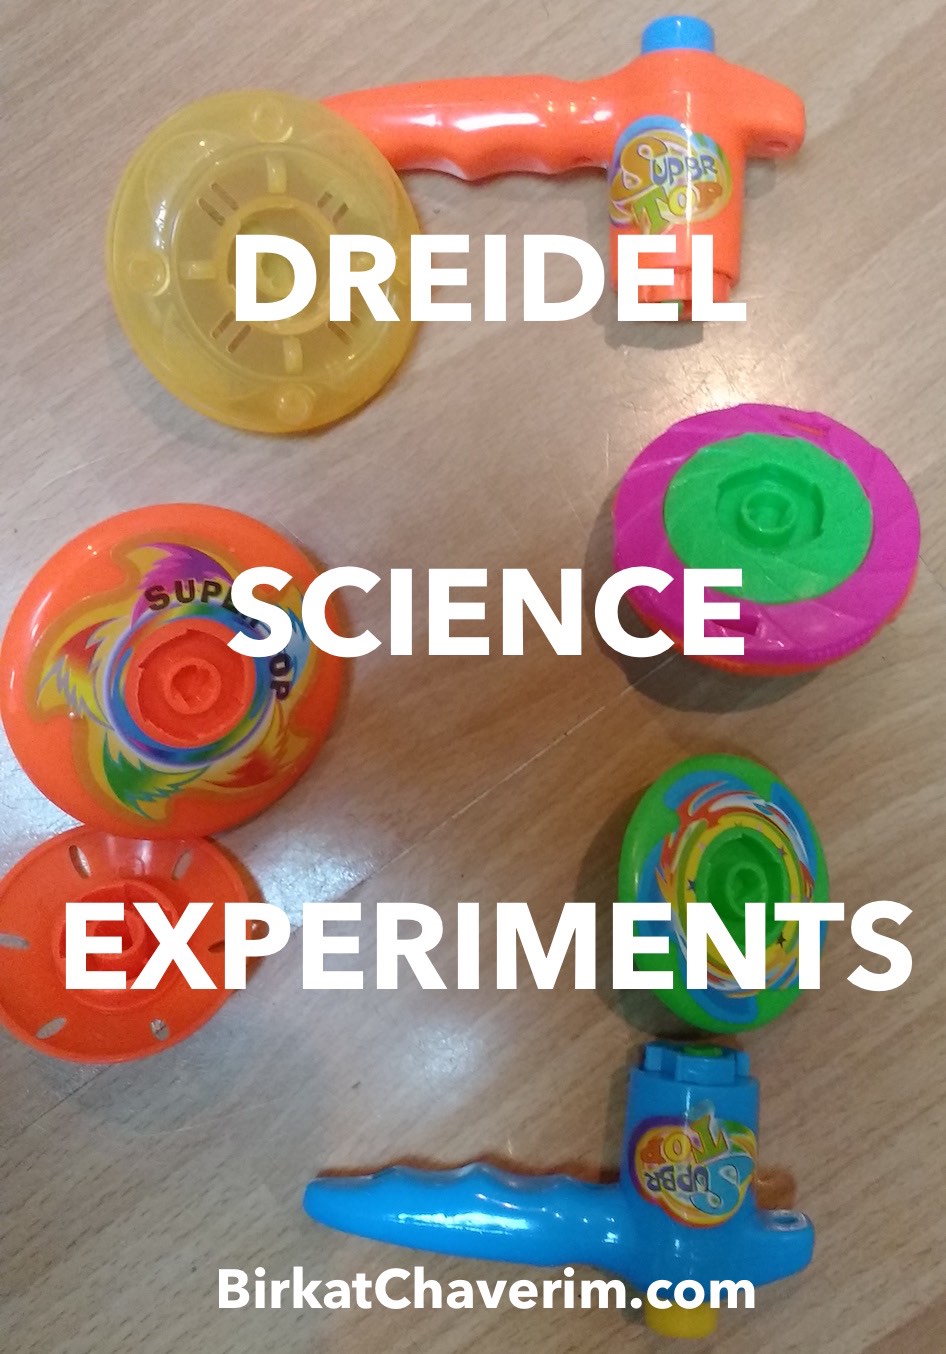 Dreidel Science Experiments via Birkat Chaverim